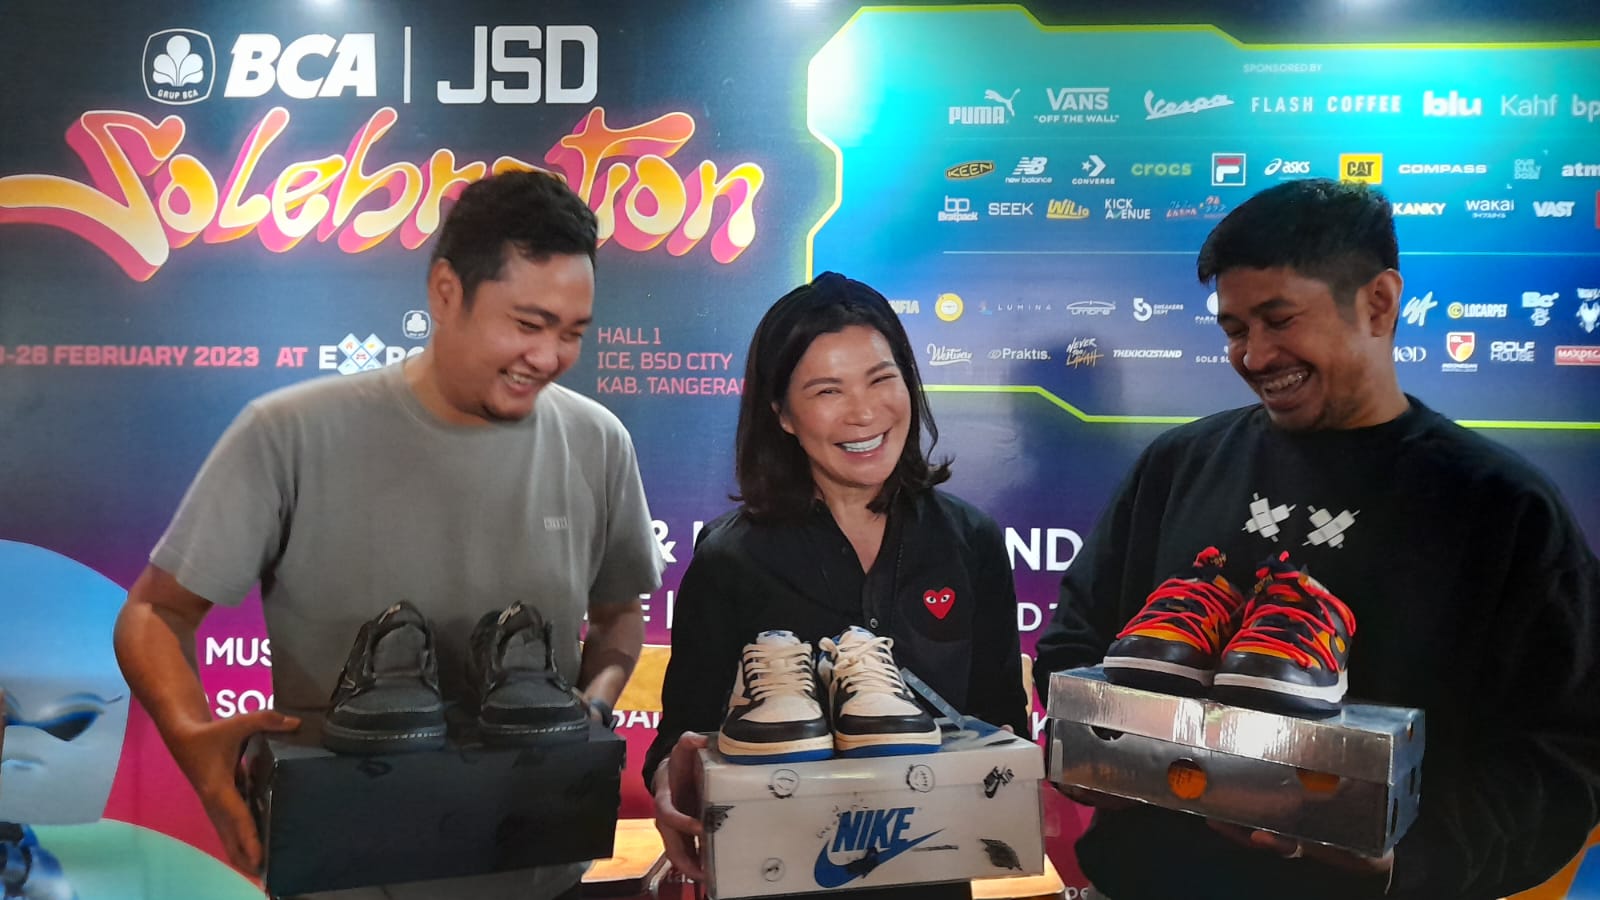 Ditopang BCA (BBCA), Pameran Sneaker Terbesar di Indonesia (JSD) Kembali Digelar